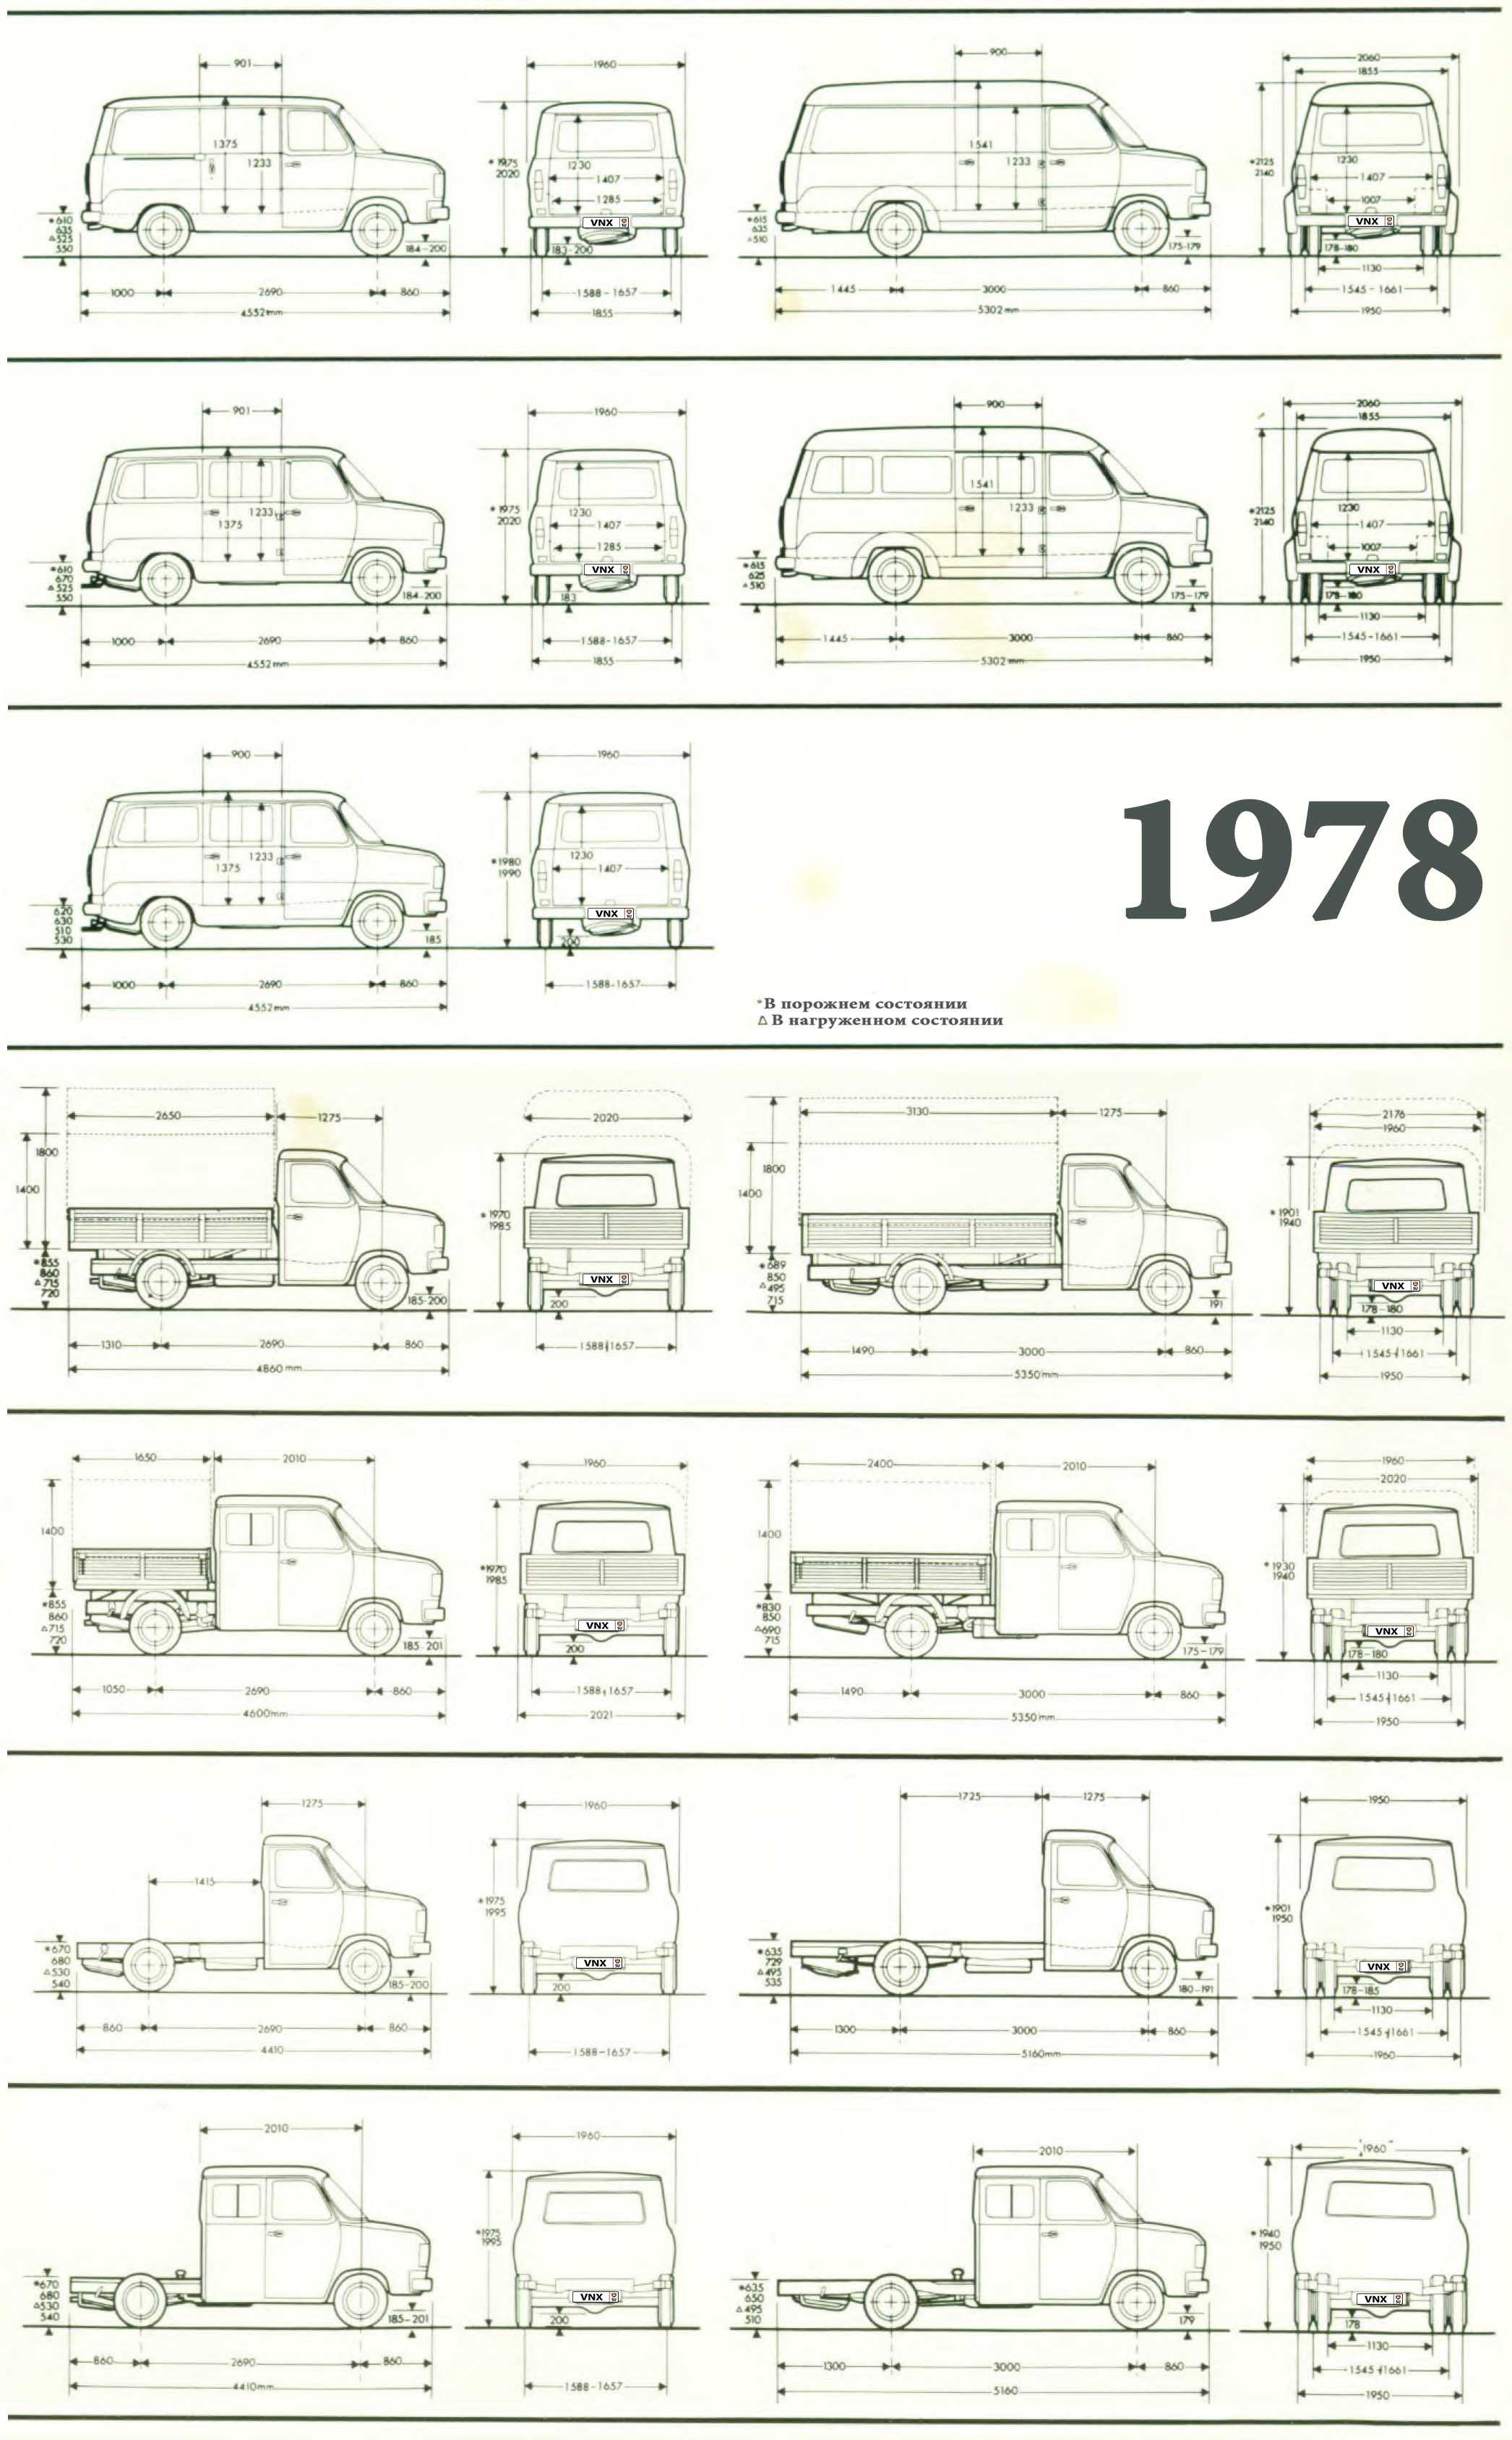 Габаритные размеры Форд Транзит 1978 (dimensions Transit Mk2)